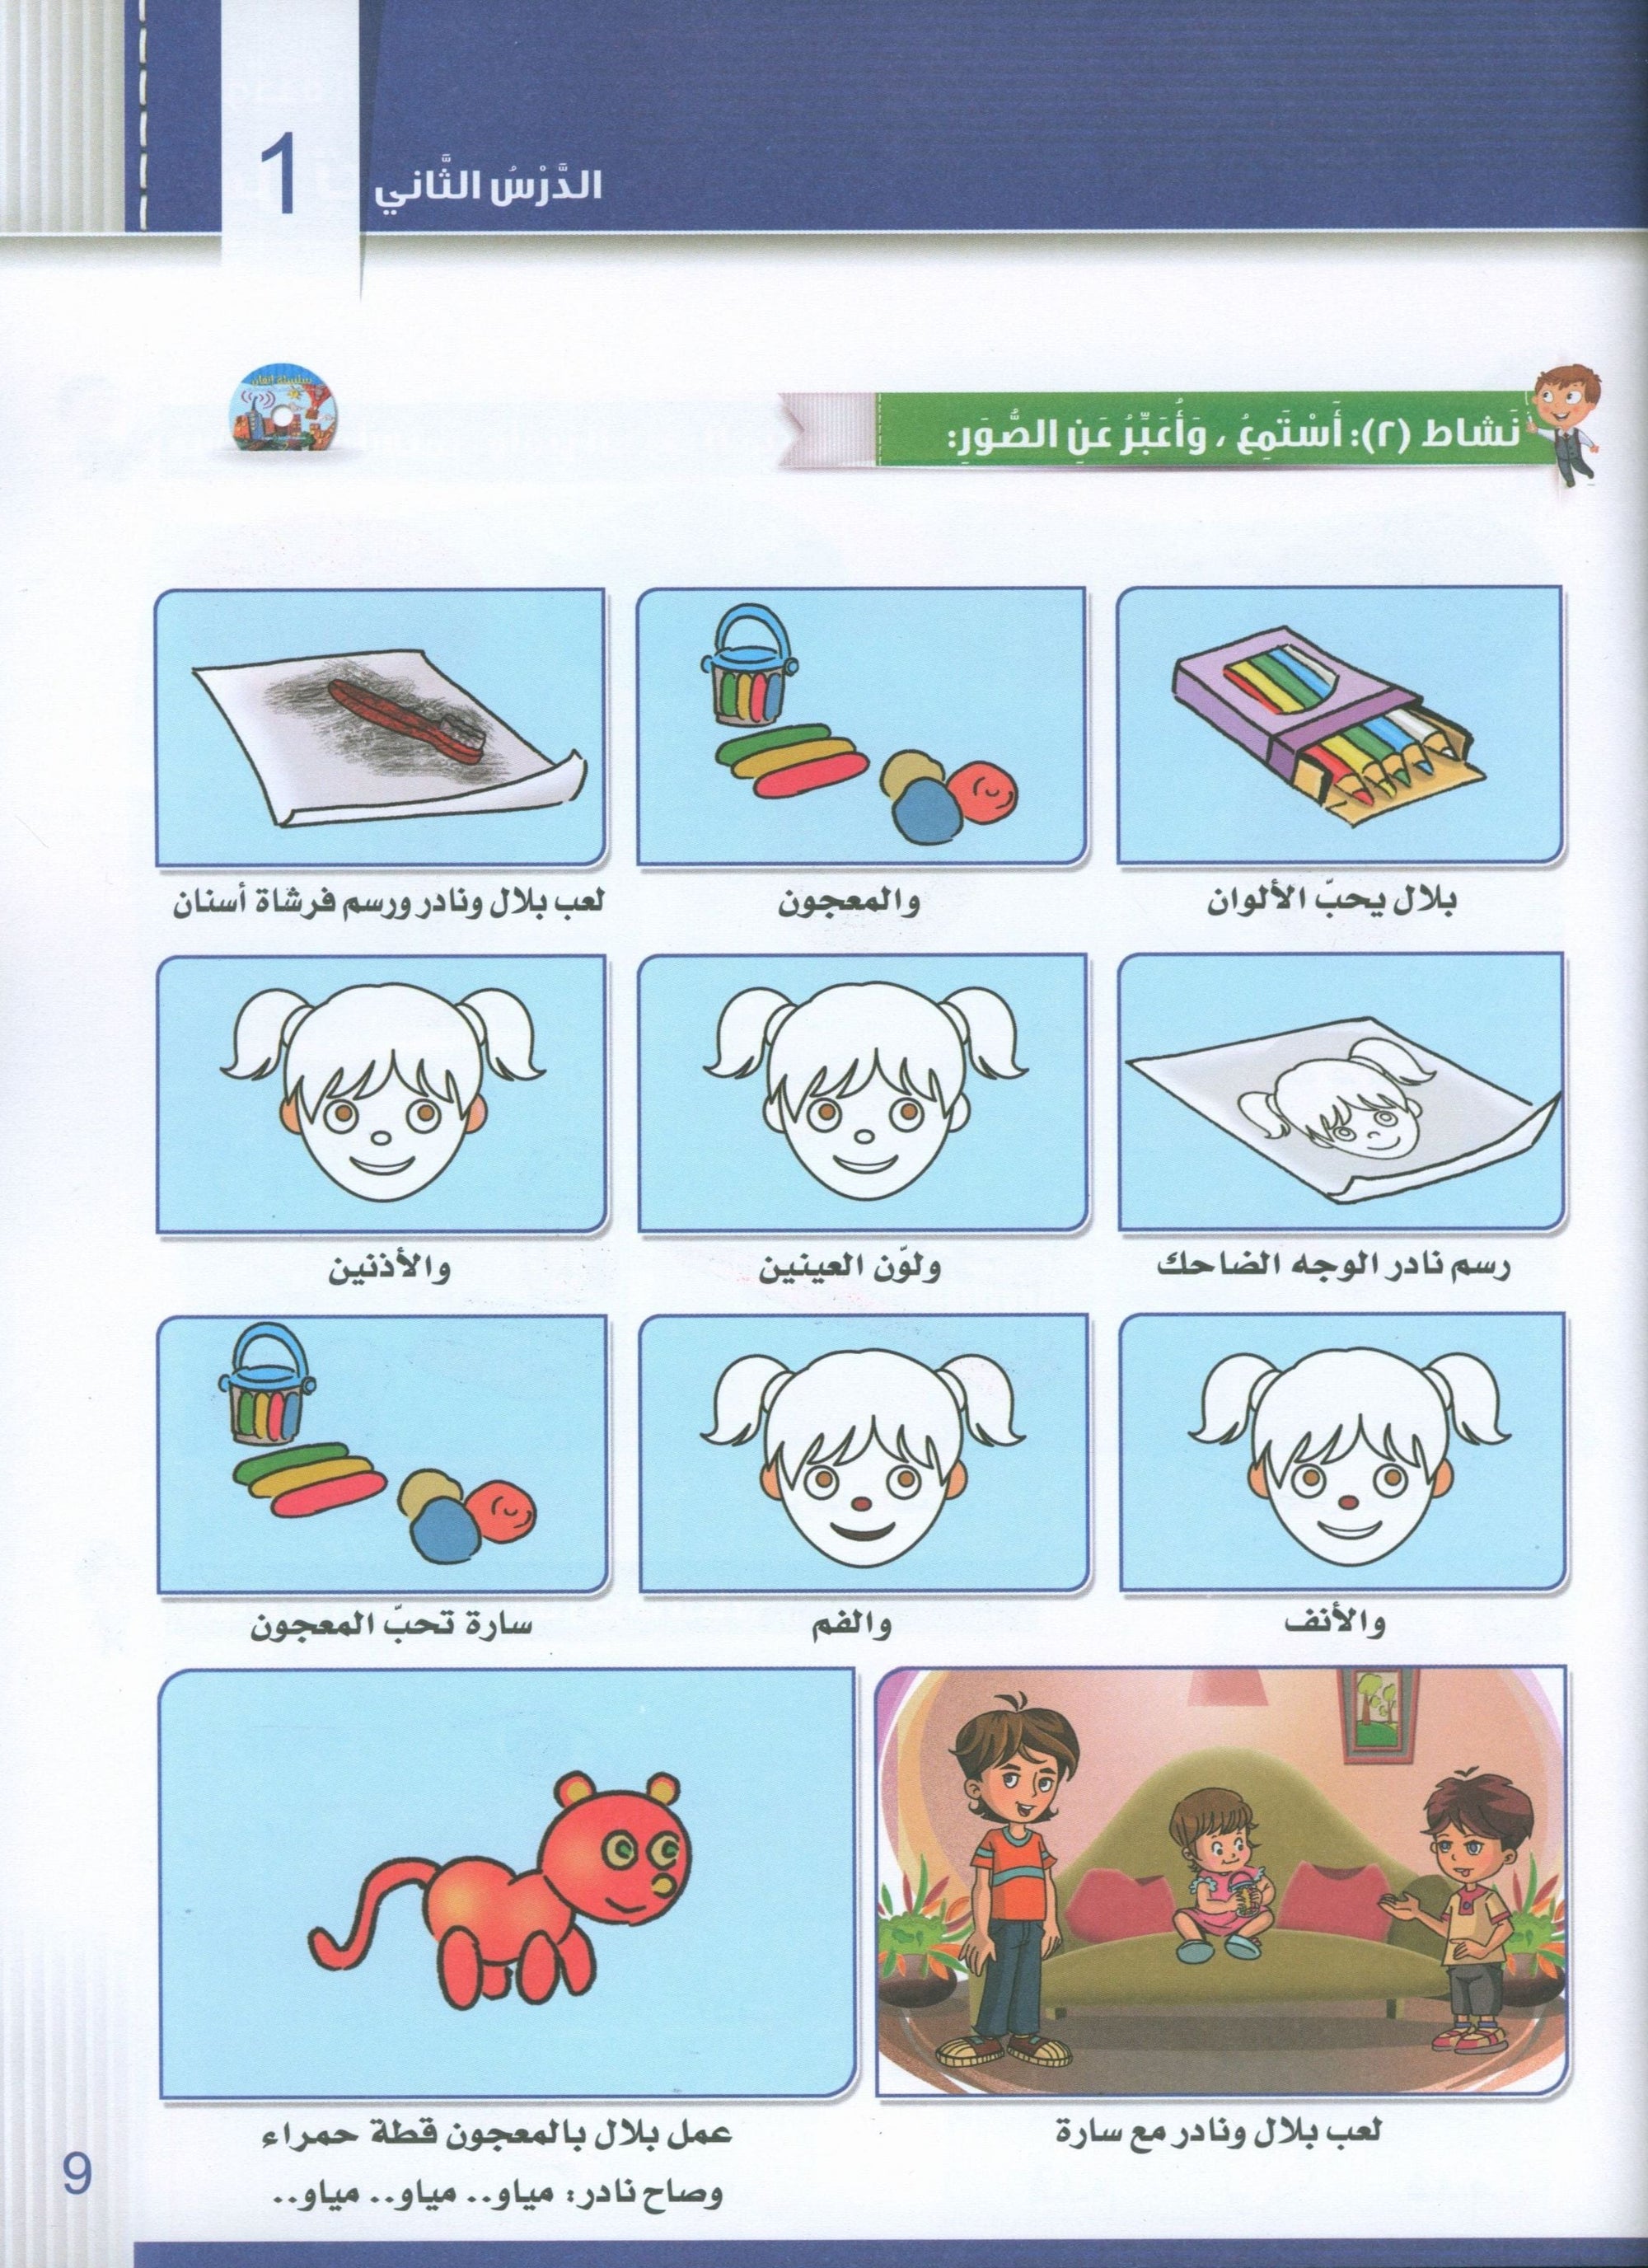 Itqan Series for Teaching Arabic Textbook (with Audio CD): KG2 سلسلة إتقان لتعليم اللغة العربية كتاب الطالب